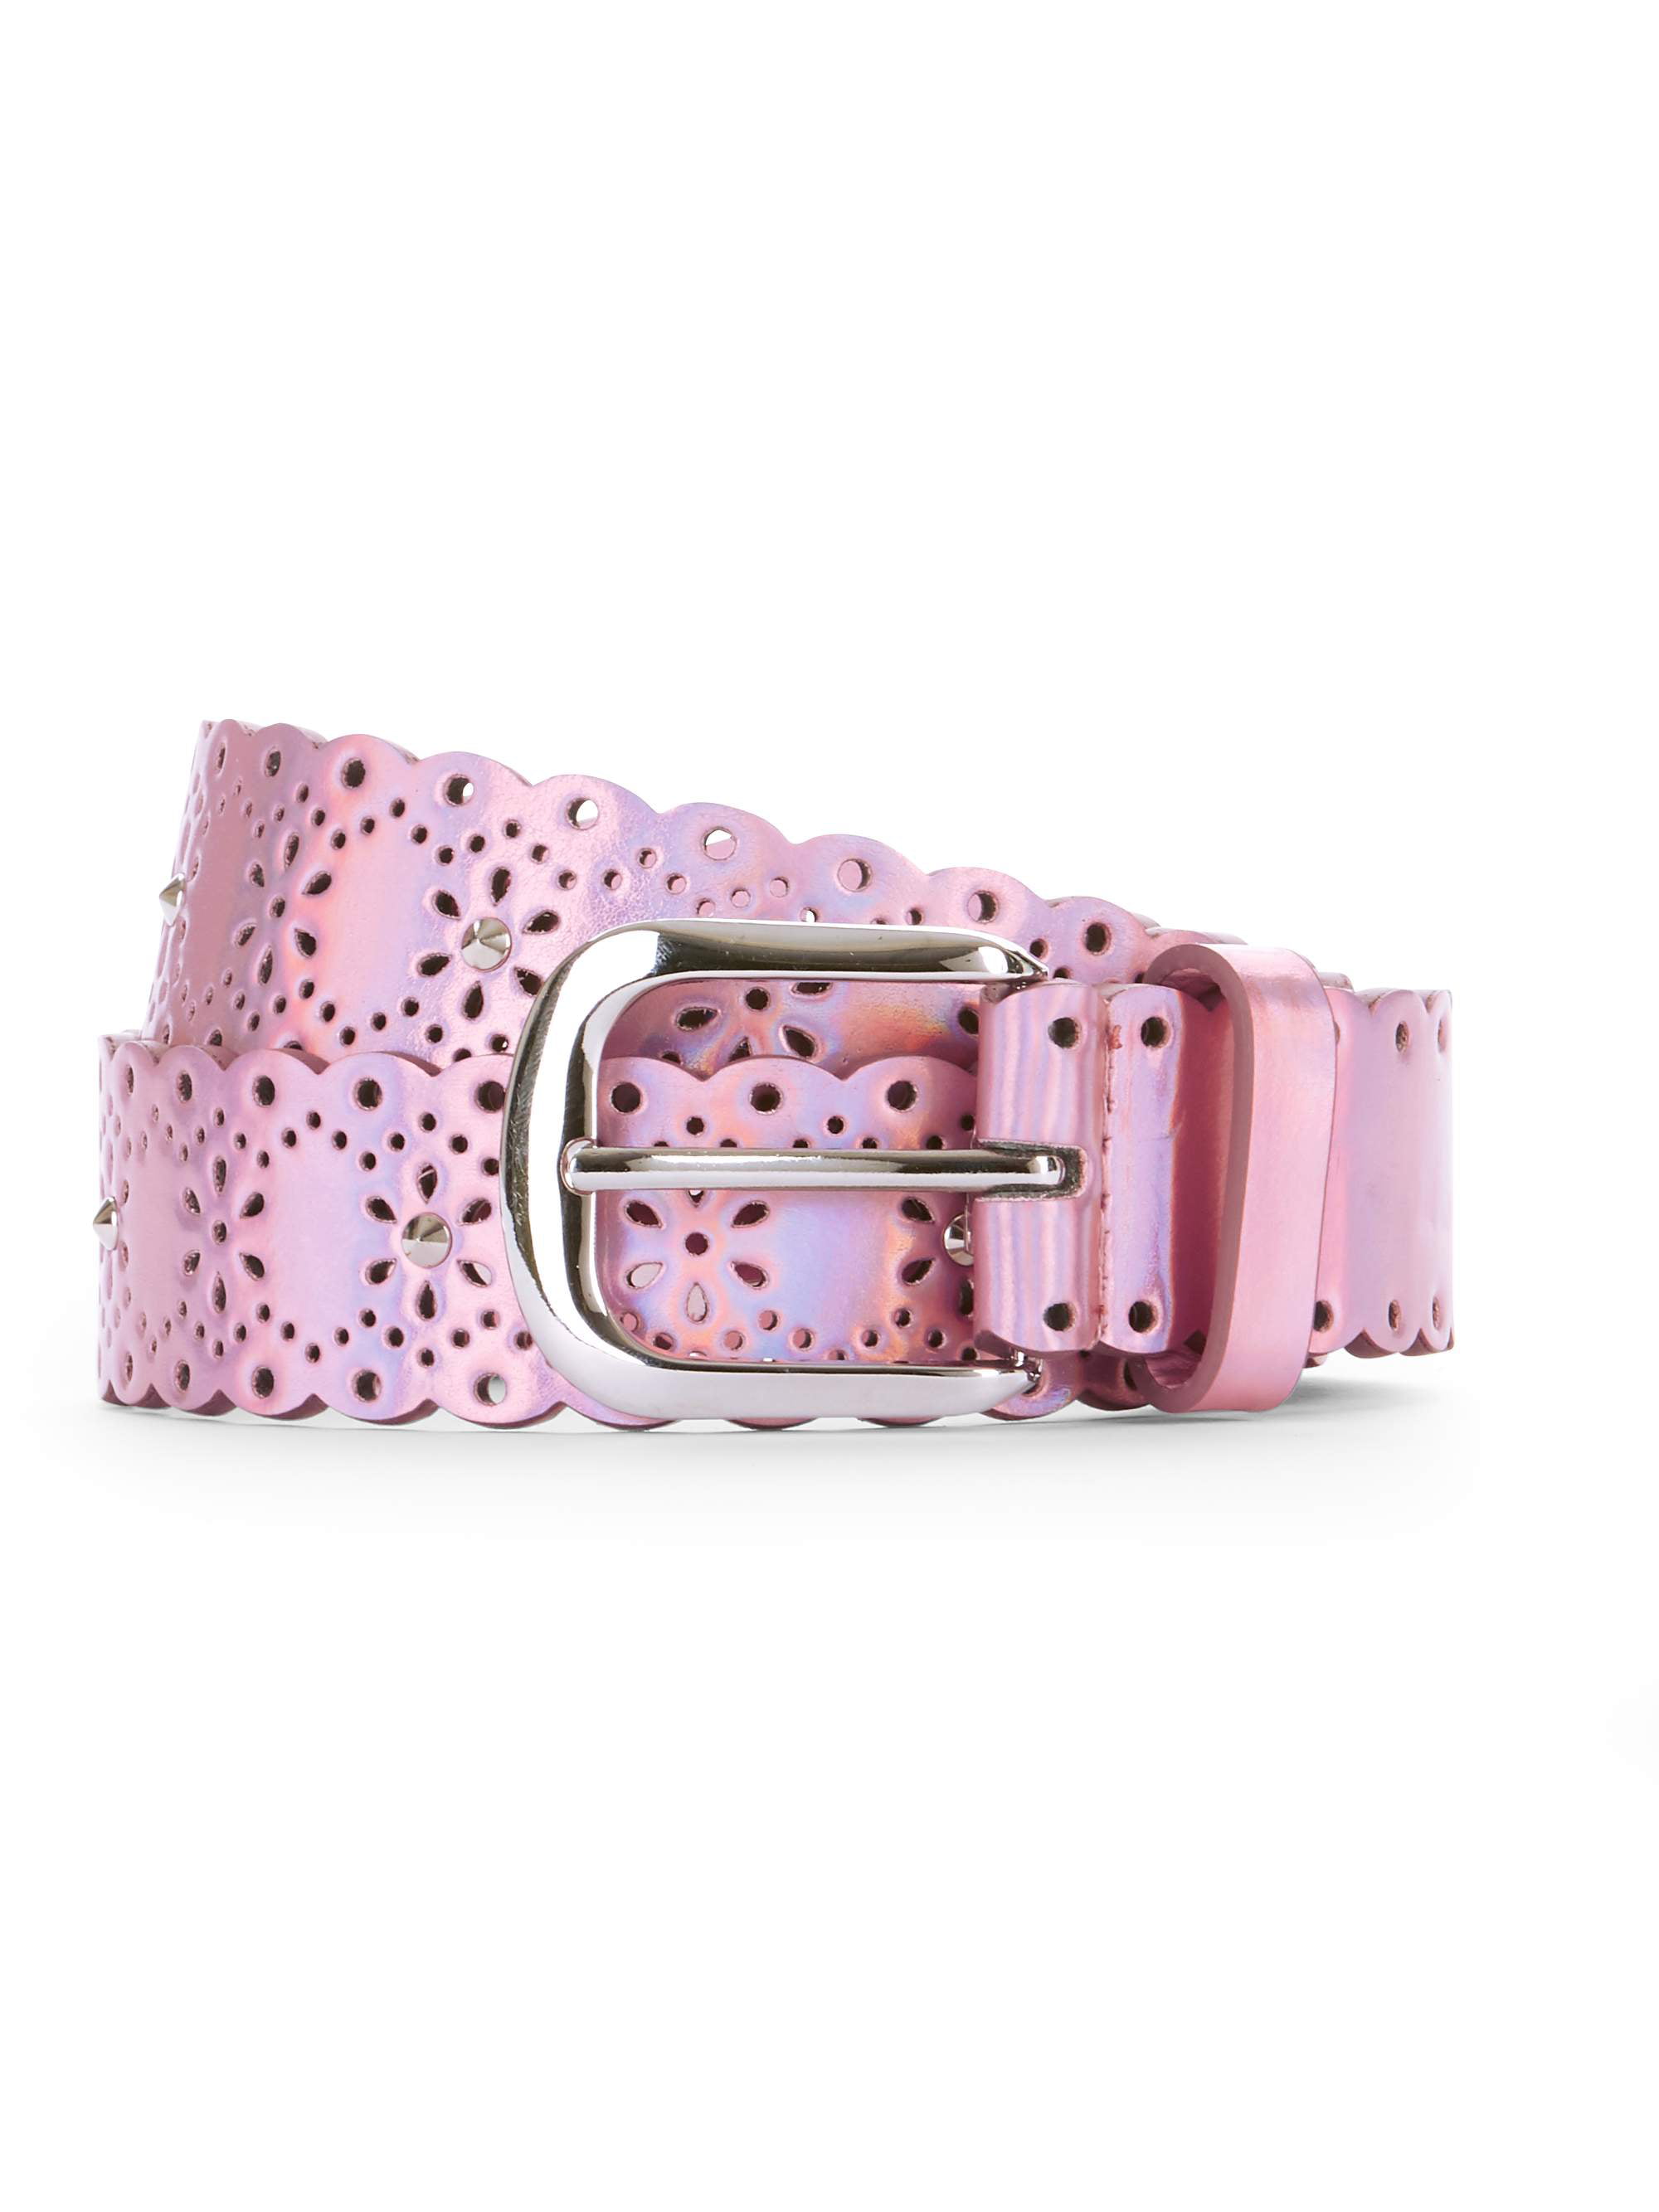 Women's Pink Iridescent Perforated Belt - Walmart.com